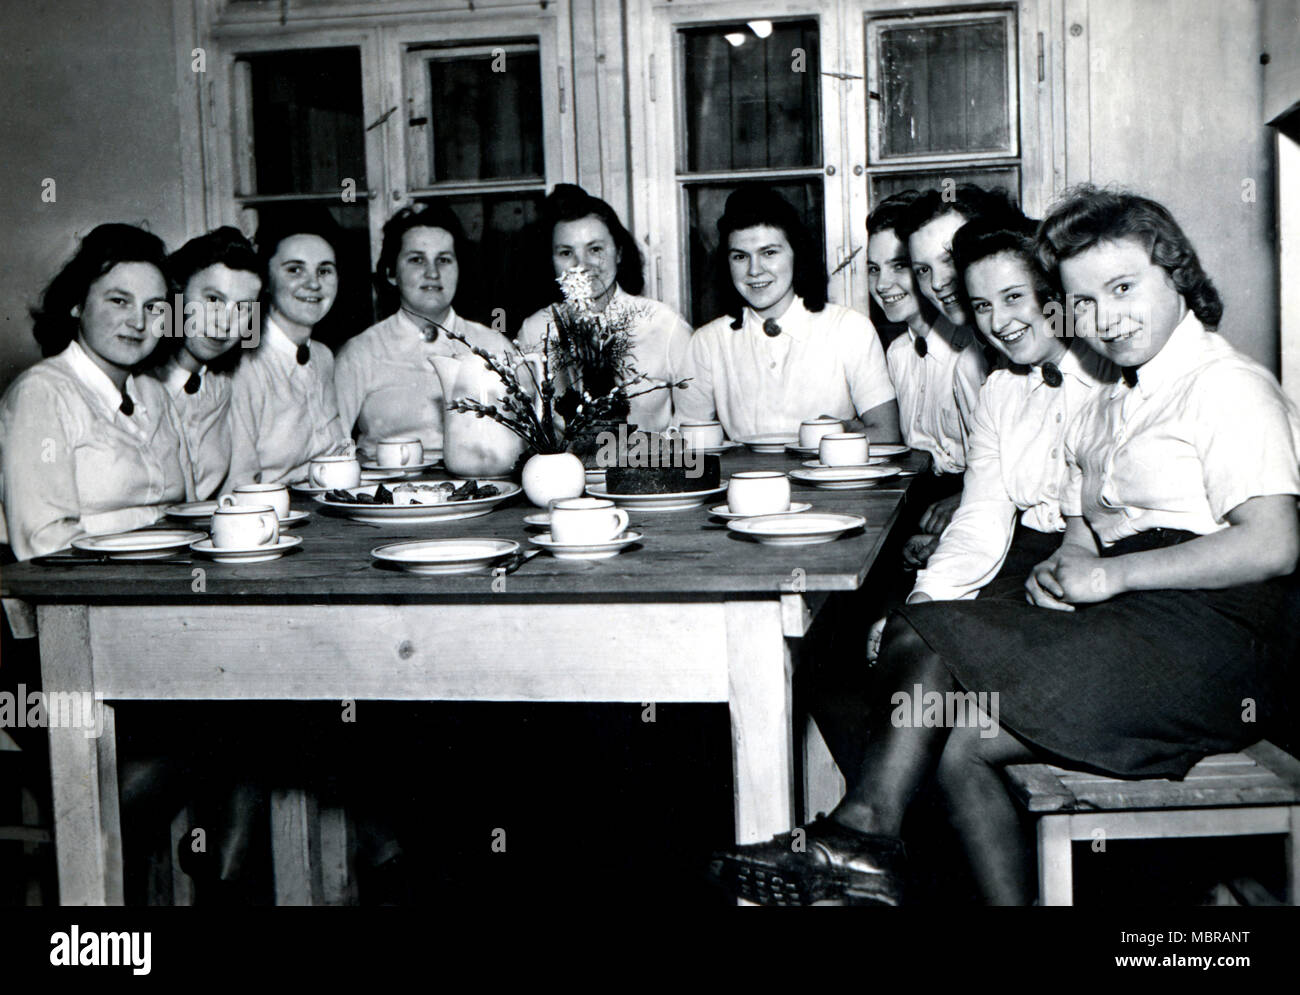 Bund deutscher Mädel (BDM), part of the Hitler Youth for Girls, coffee party, 1940s, Germany Stock Photo